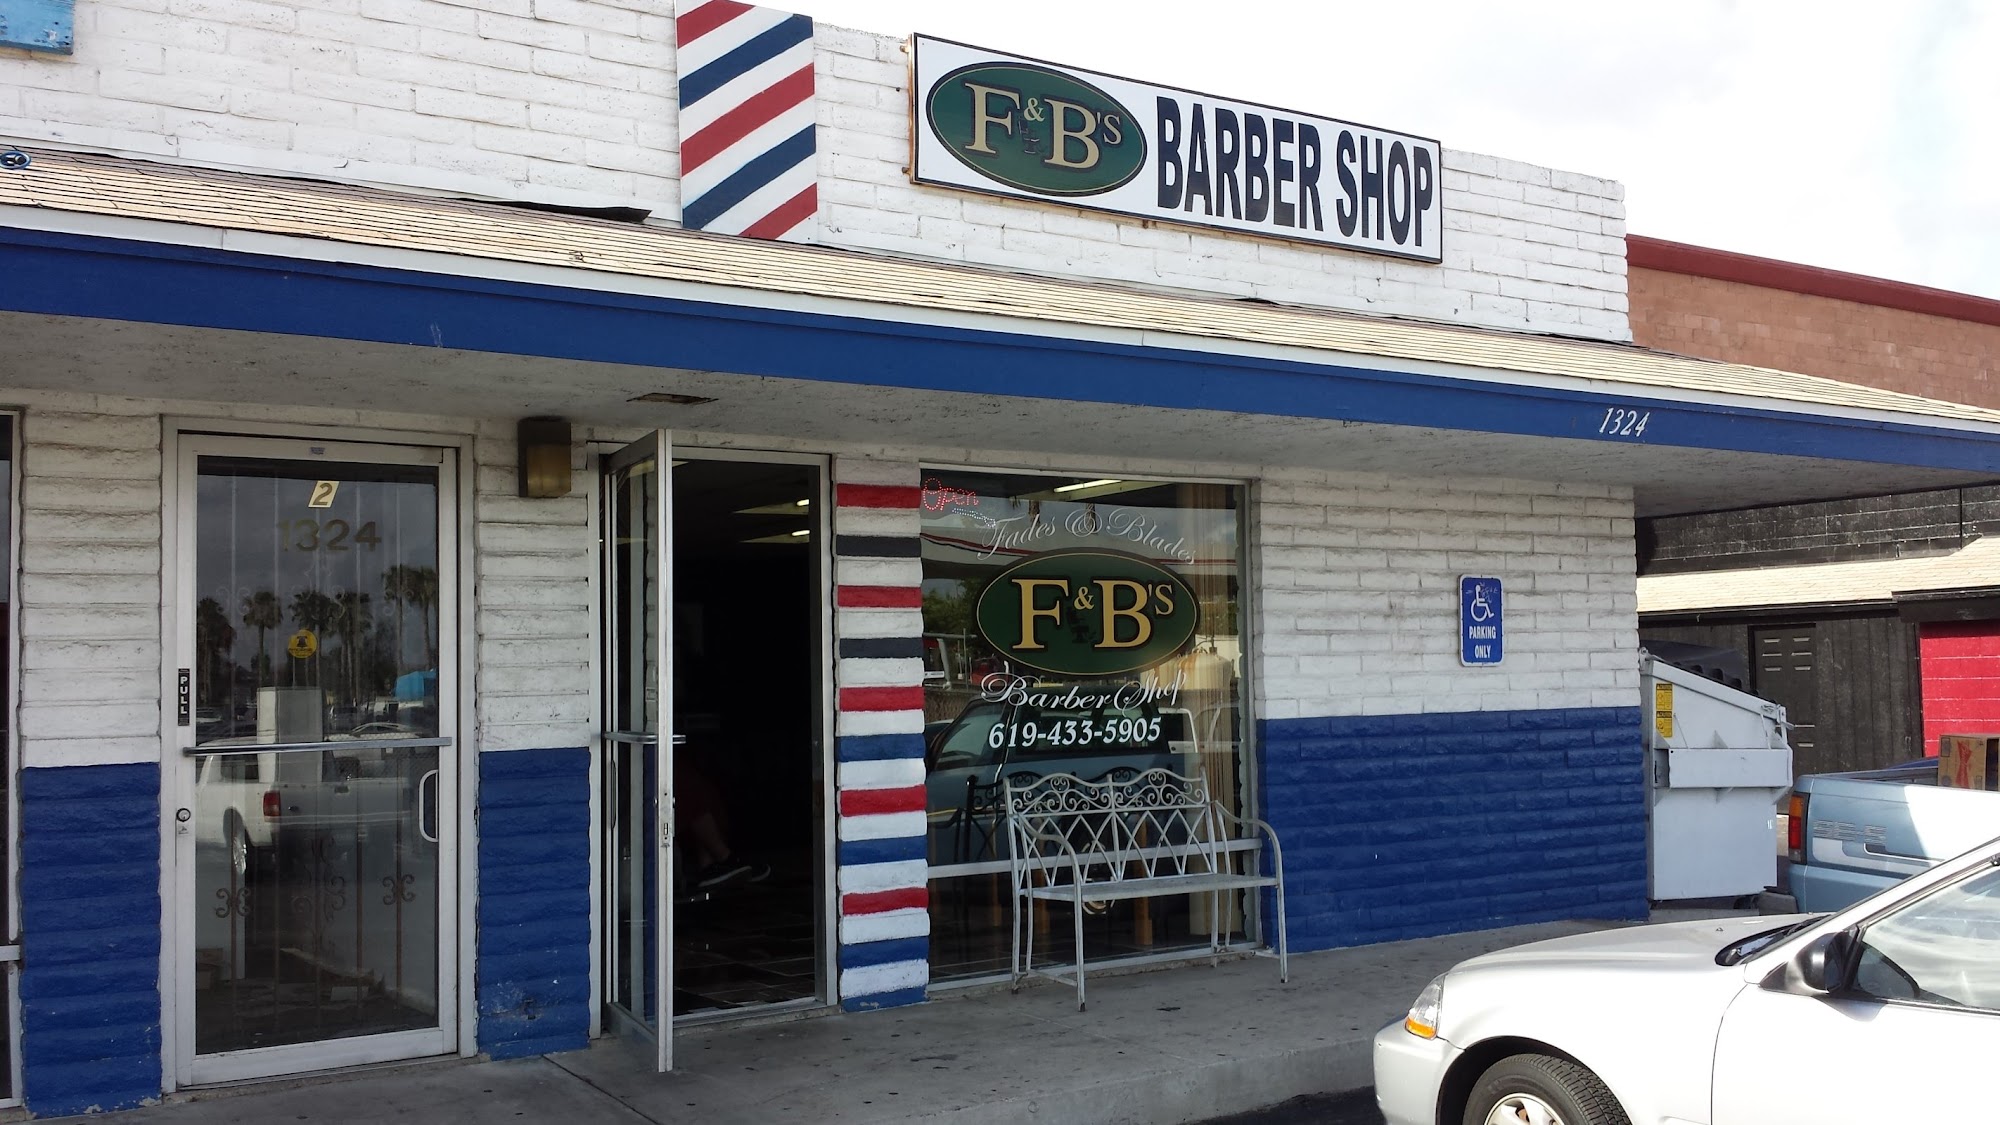 F & B's Barber Shop